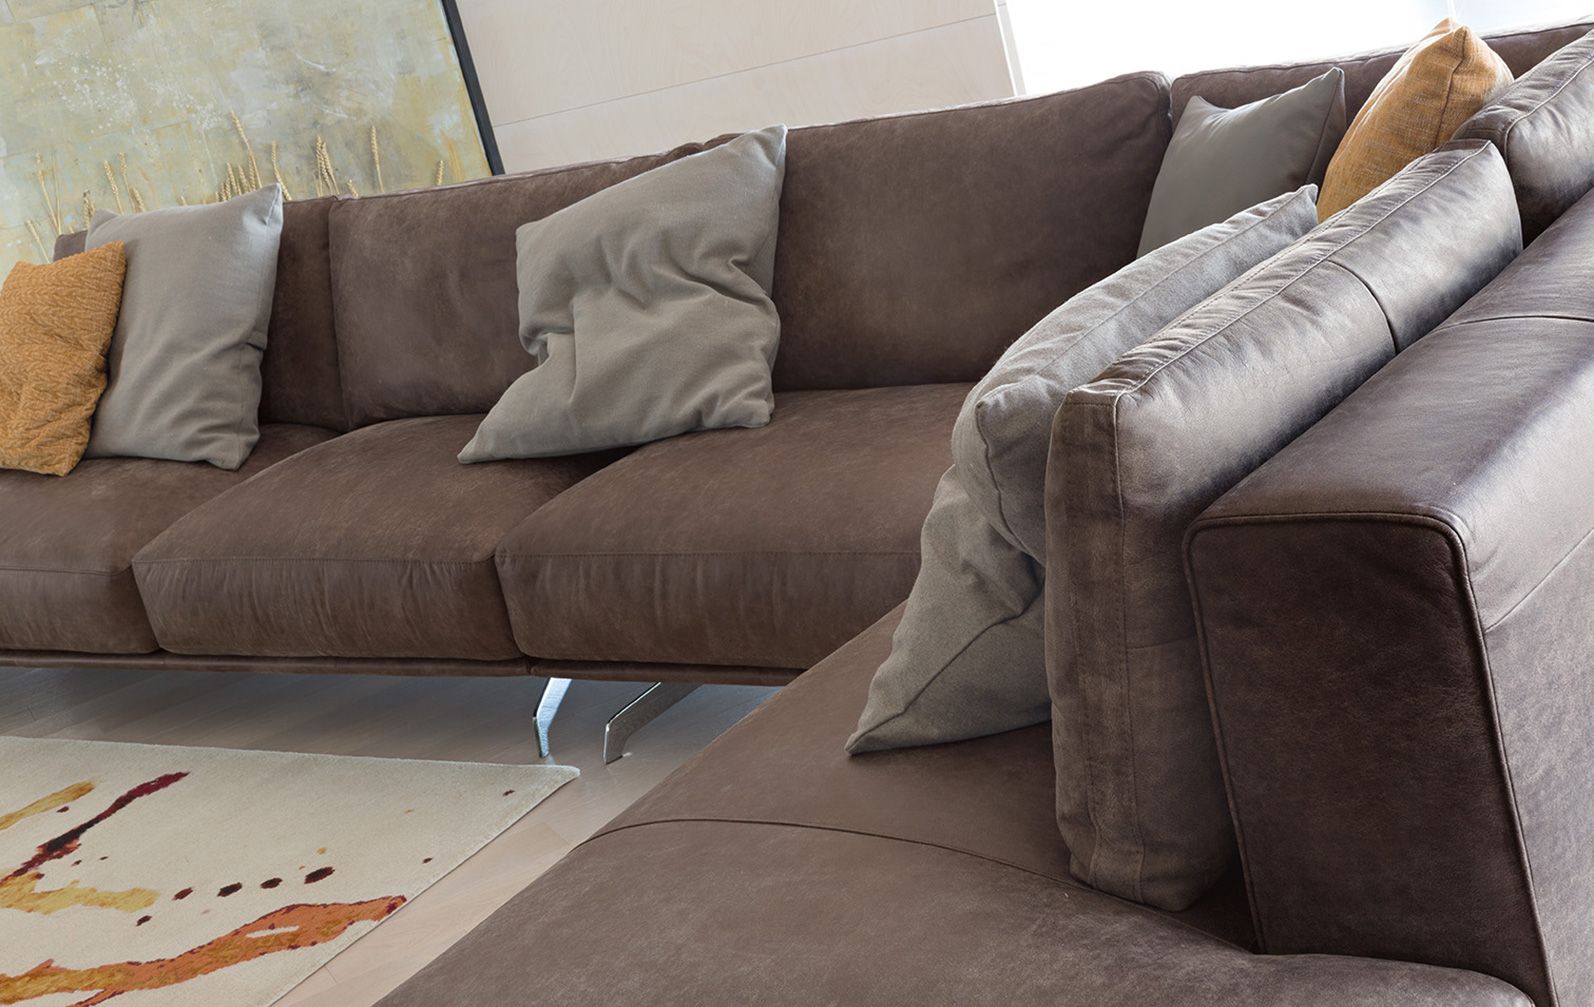 Dalton sofa by Ditre Italia